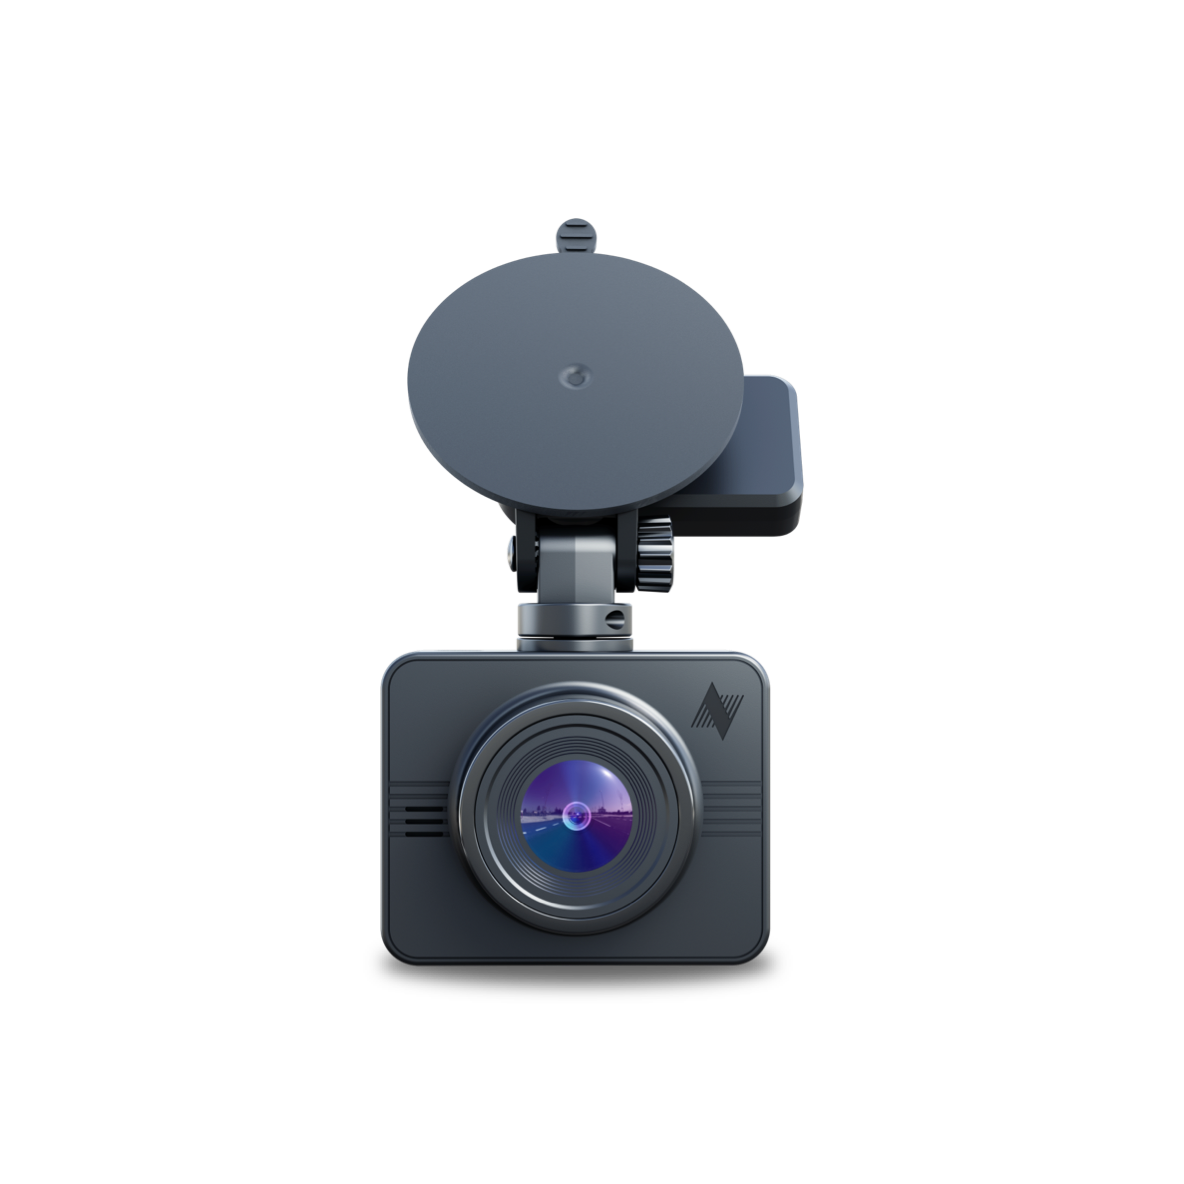 Stand-Alone Dash Cameras